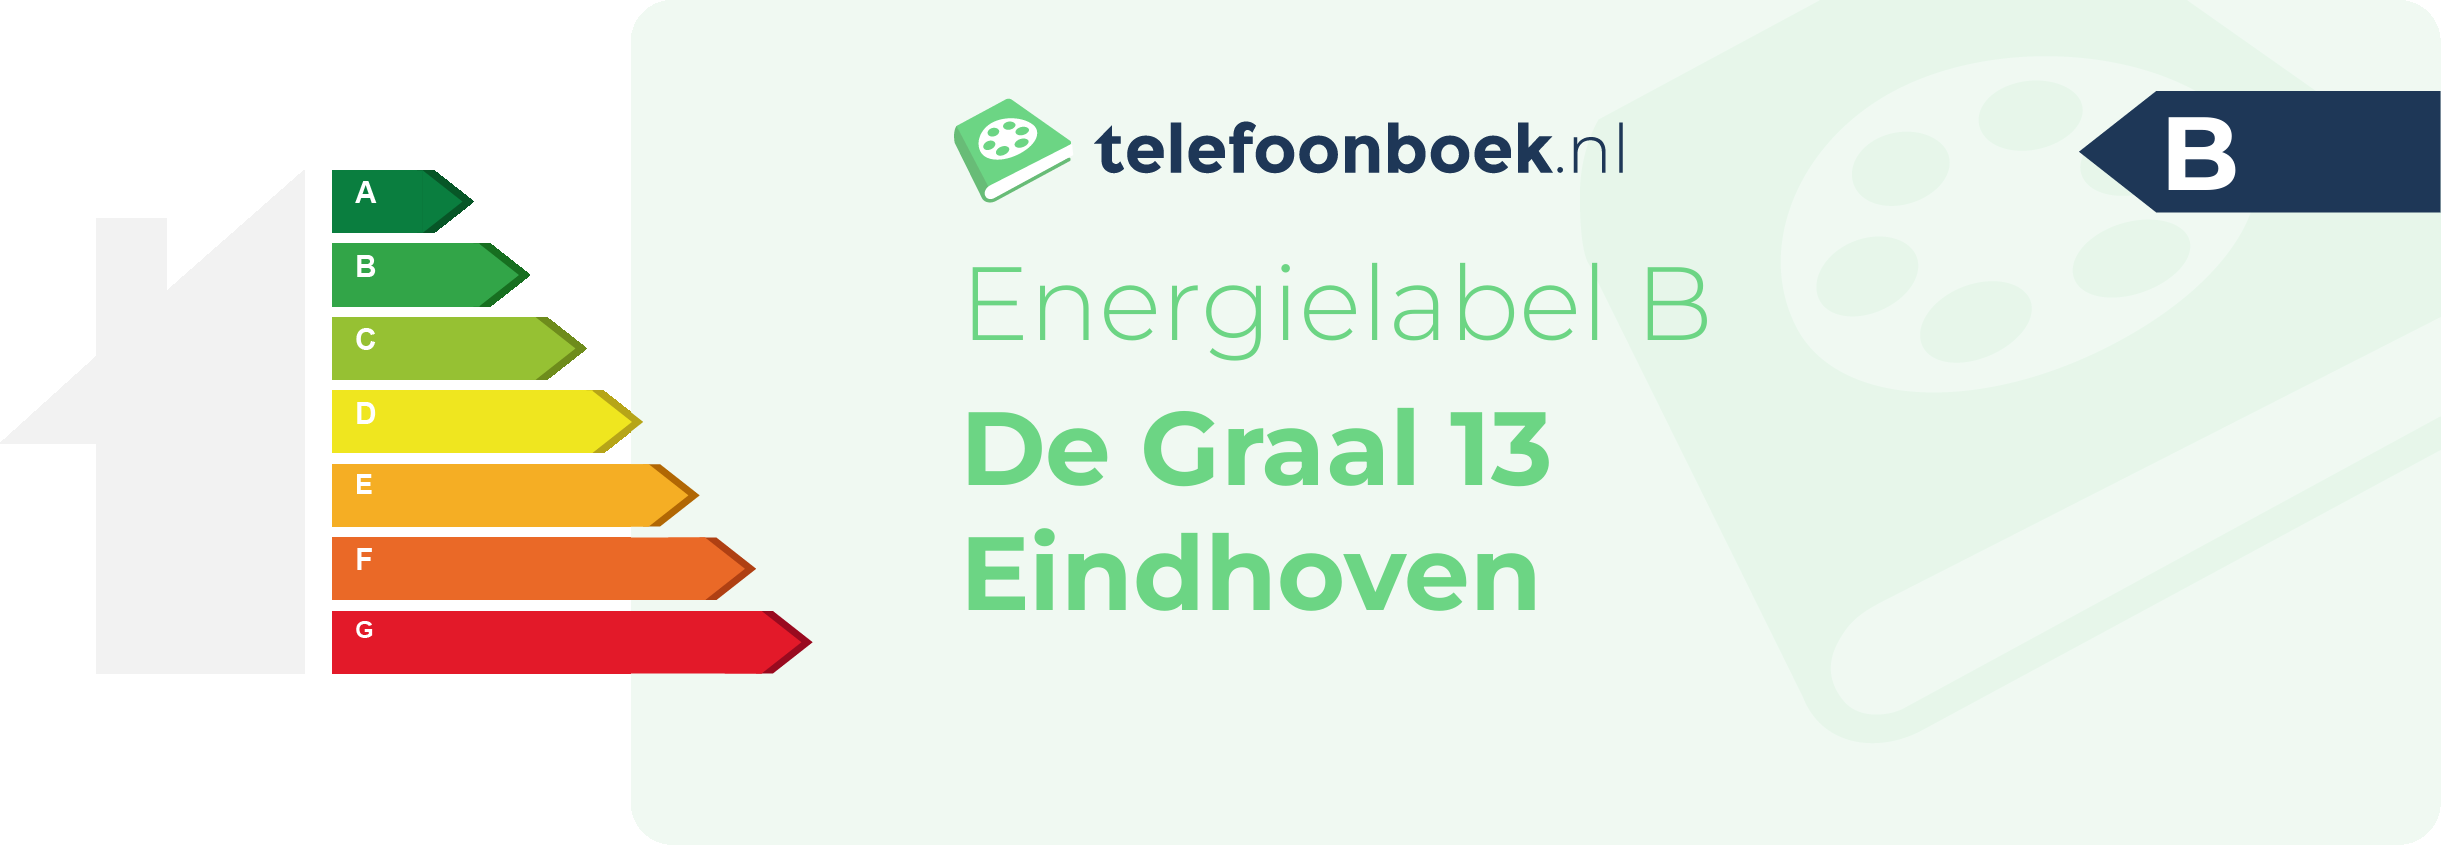 Energielabel De Graal 13 Eindhoven